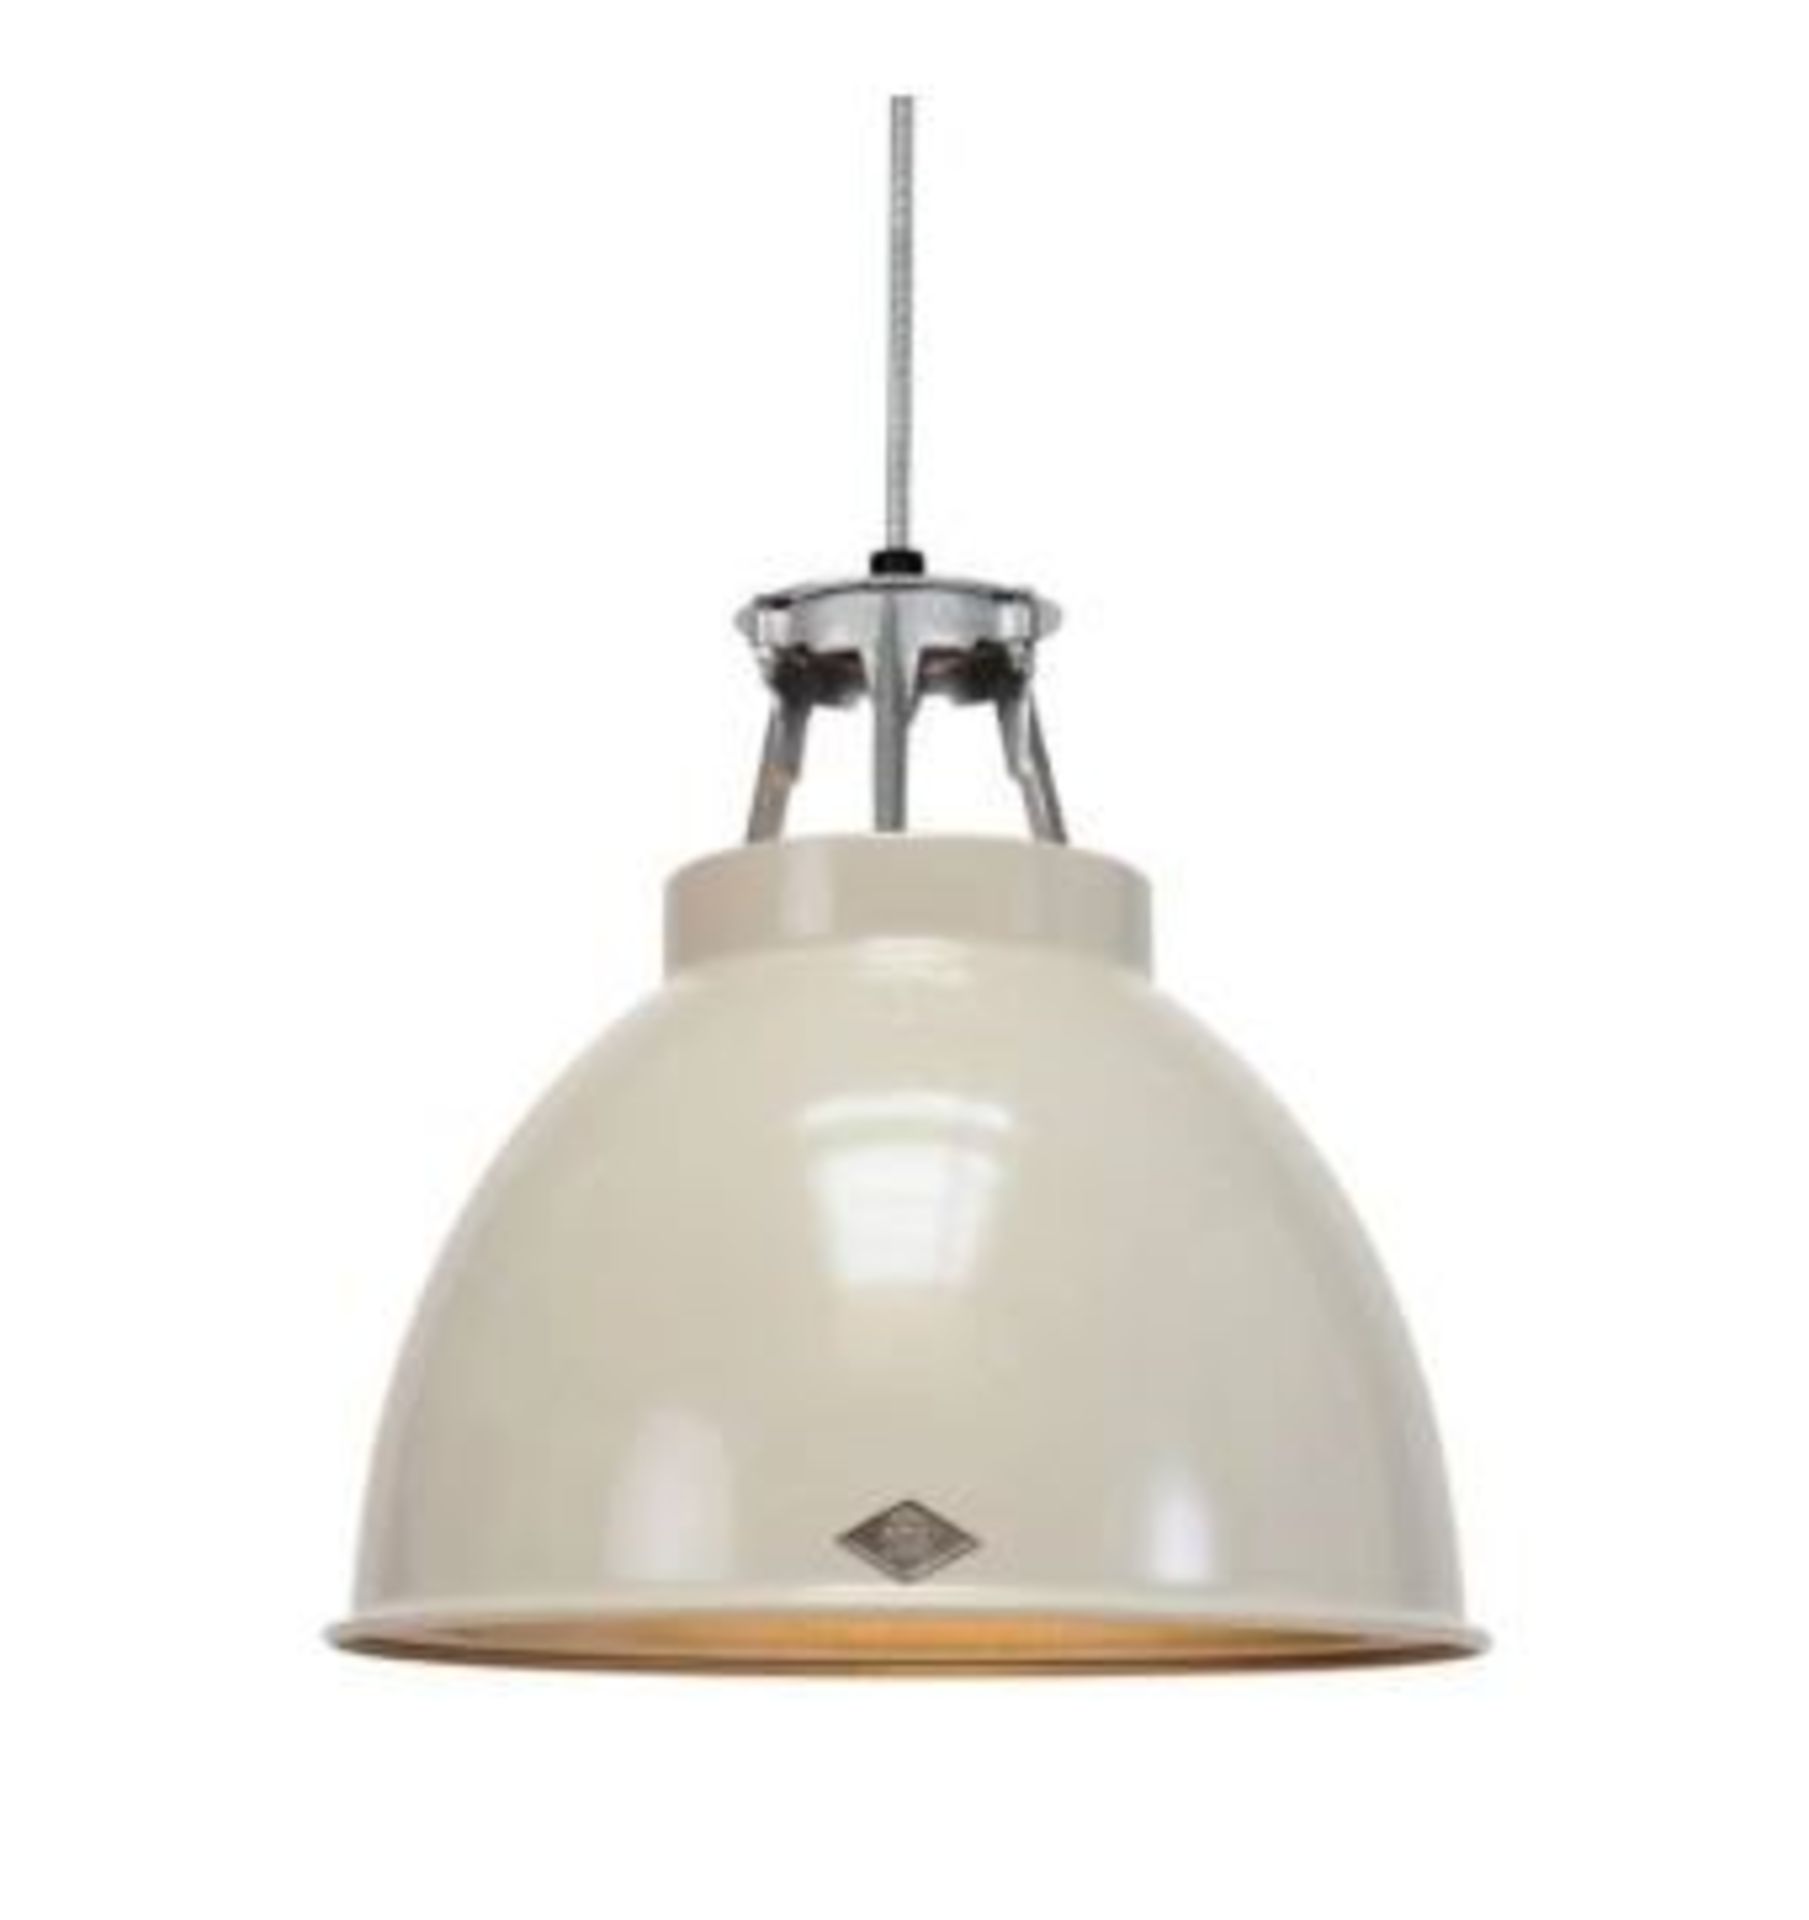 1 x Original BTC Titan Ceiling Light, Size 3 - Cream with Putty Interior (Glass Diffuser) RRP £319